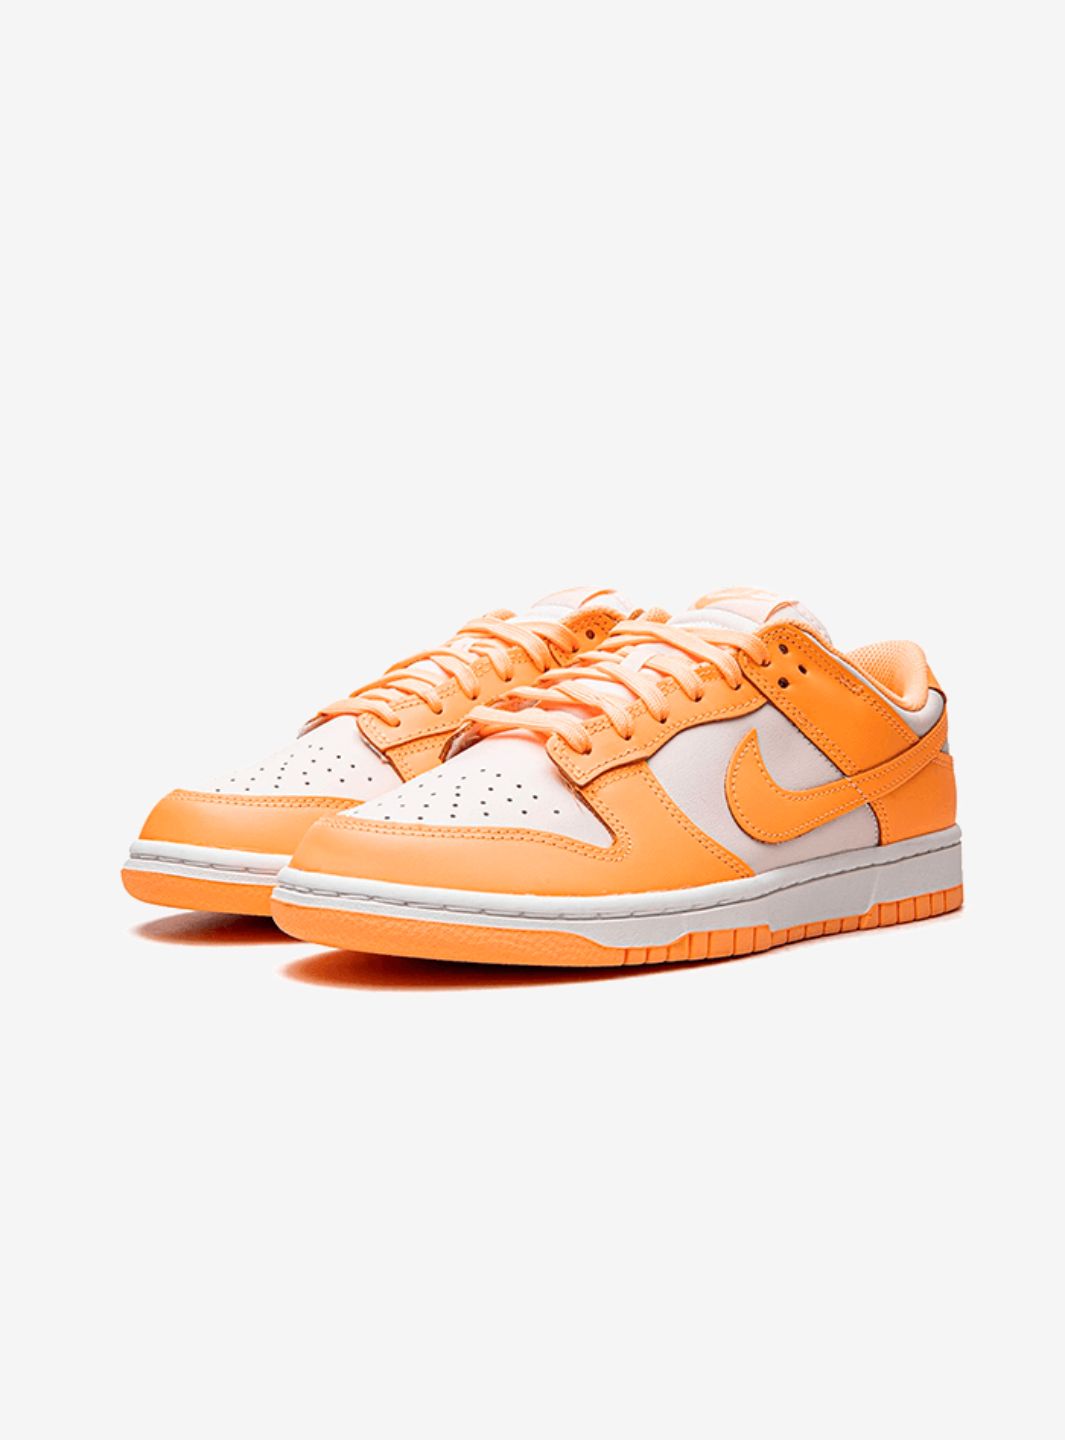 Nike Dunk Low Peach Cream - DD1503-801 | ResellZone